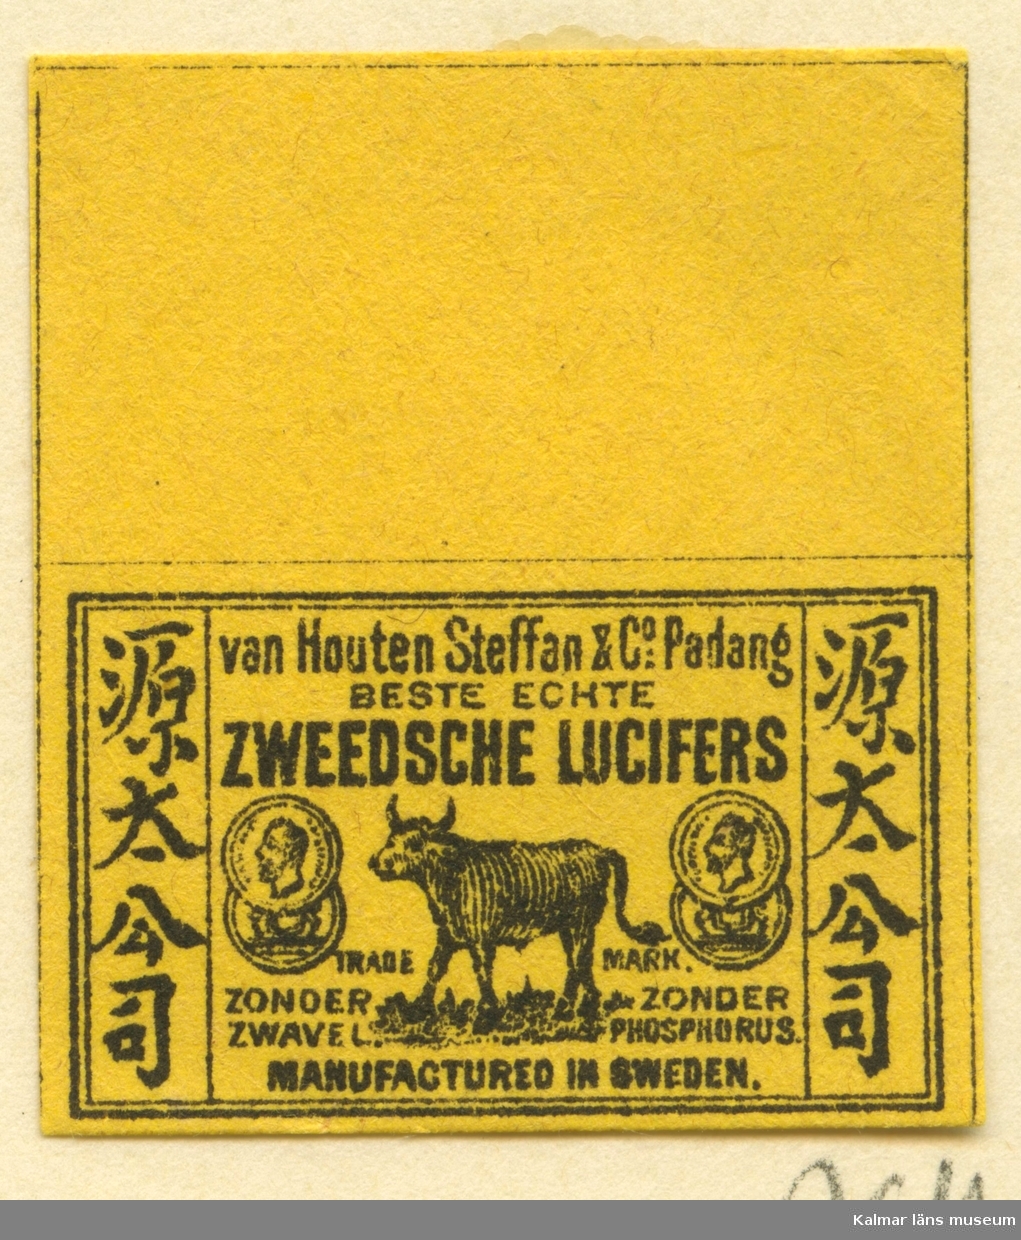 Tändsticksetikett från Mönsterås Tändsticksfabrik, "Van Houten Steffan &Co Padang beste echte Zweedsche lucifers "